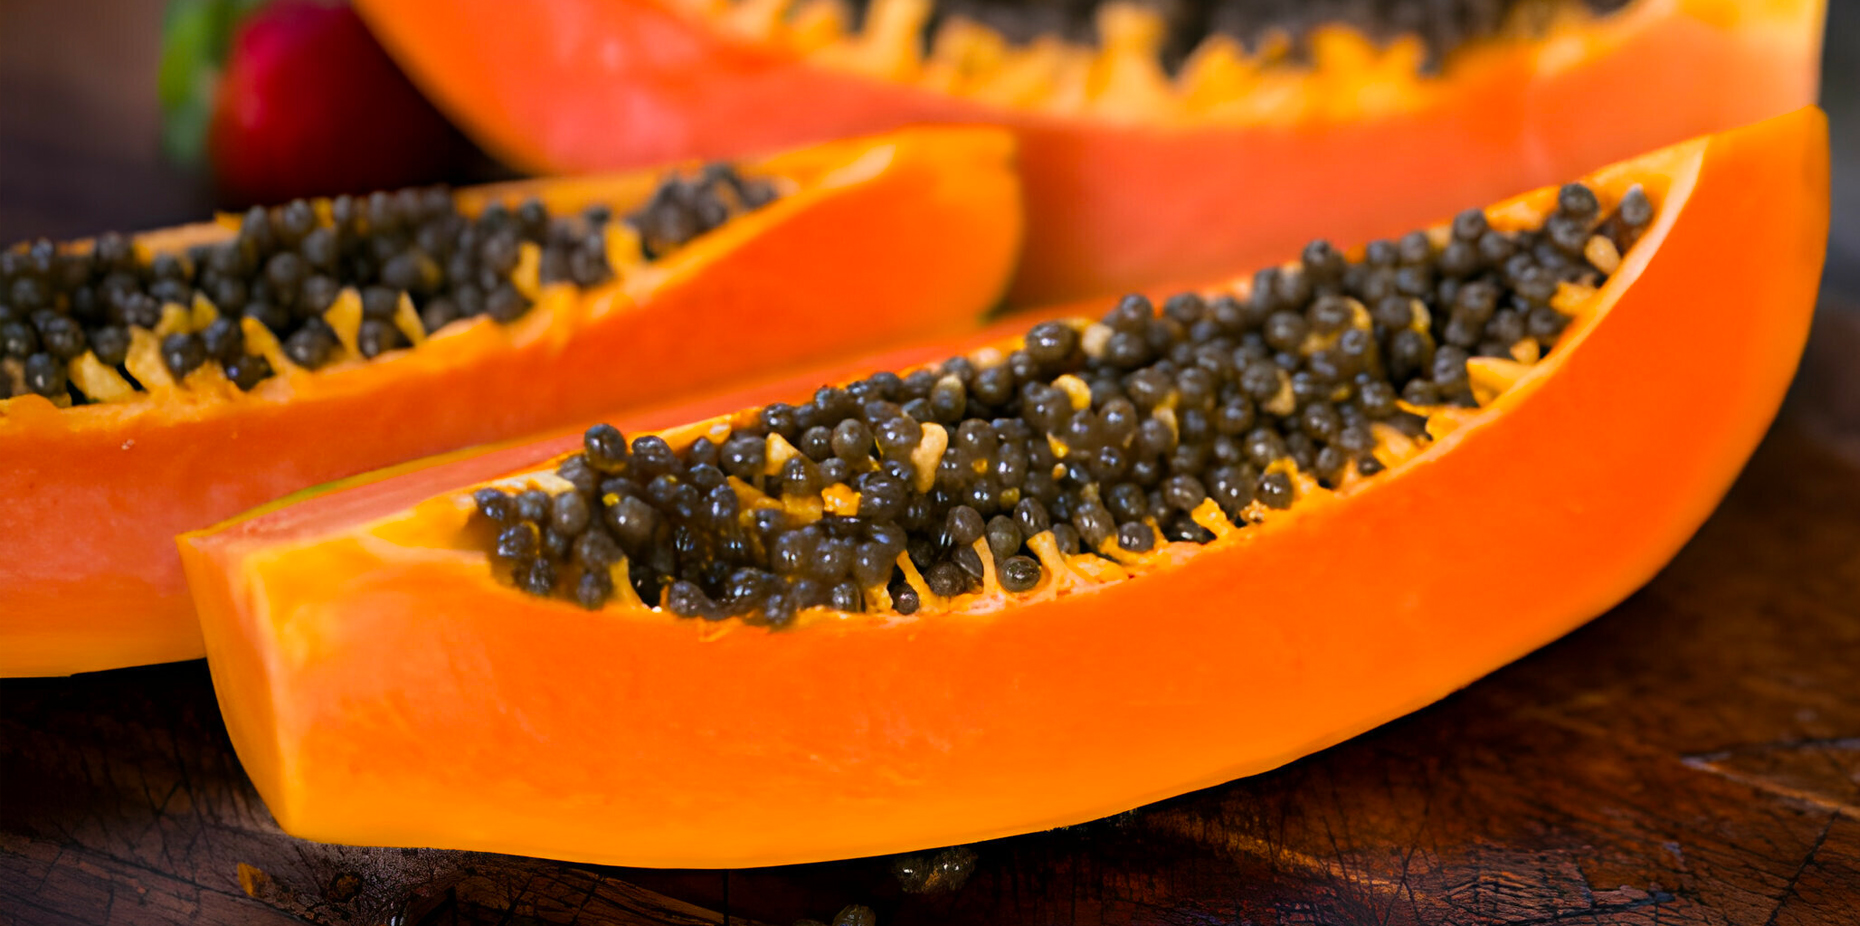 Papaya: Facts, Nutrition, Benefits, & More